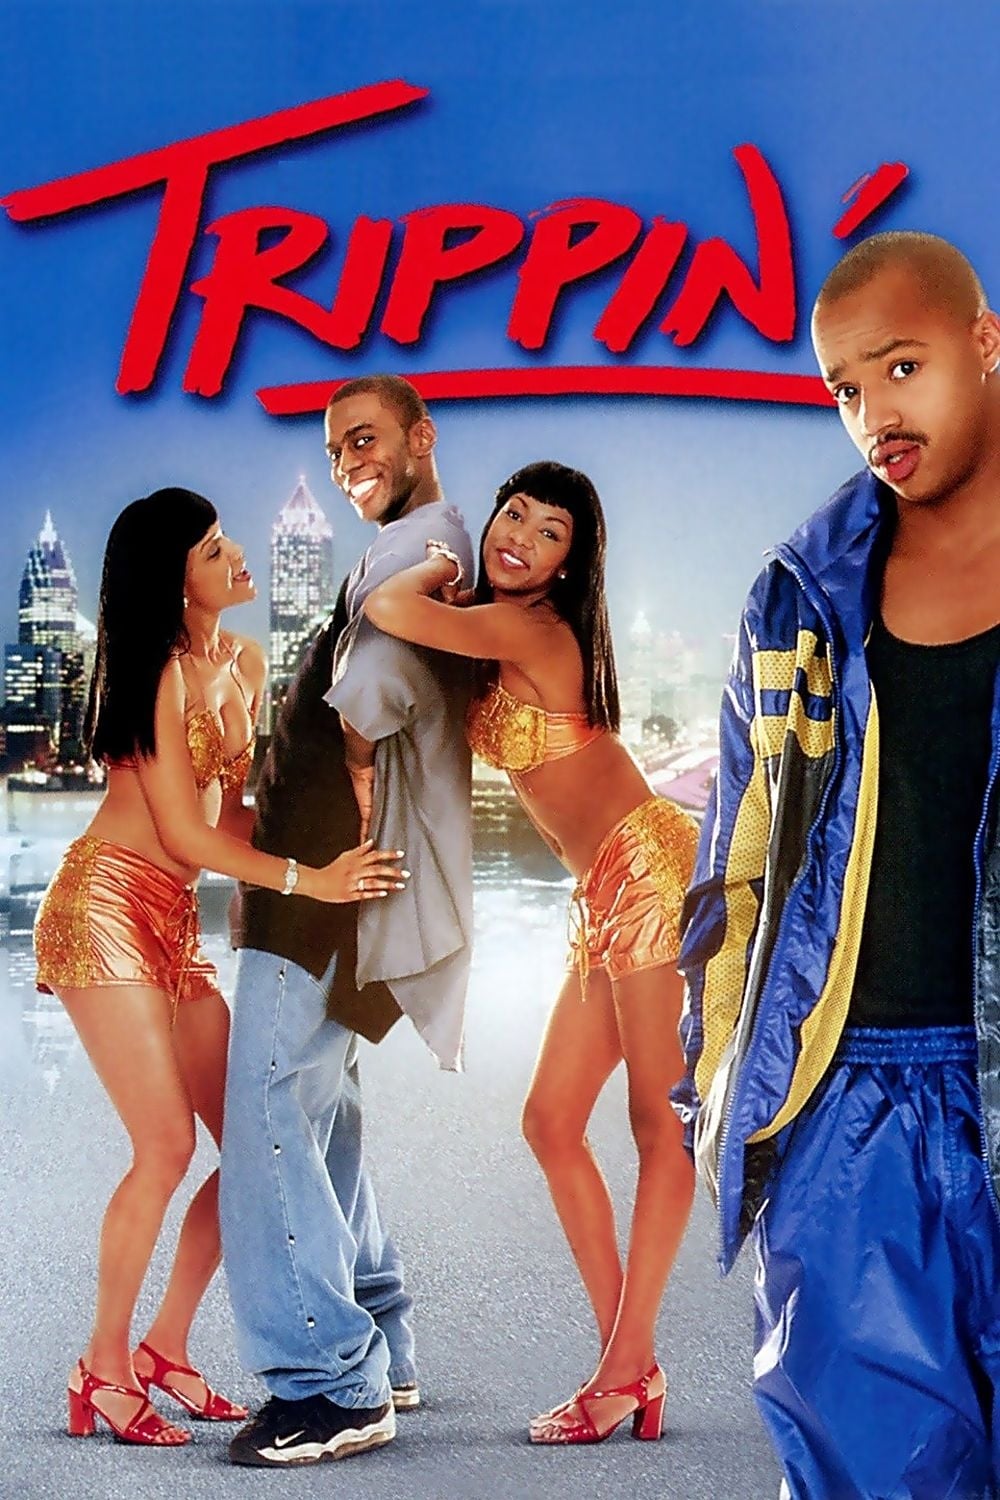 Trippin' (1999)